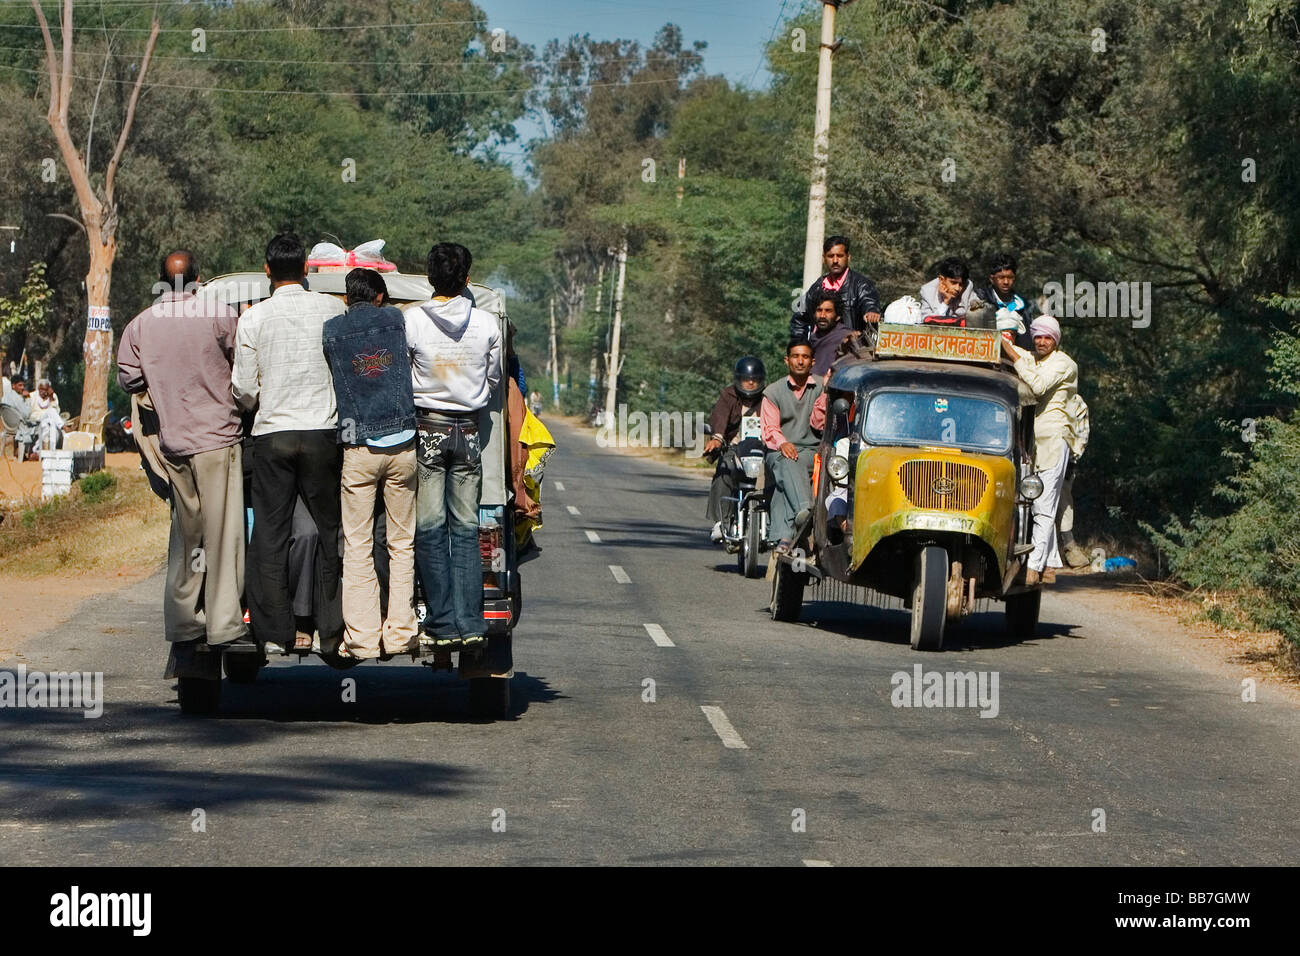 indian-auto-rickshaw-or-tuk-tuk-a-three-wheeled-taxi-north-india-india-BB7GMW.jpg